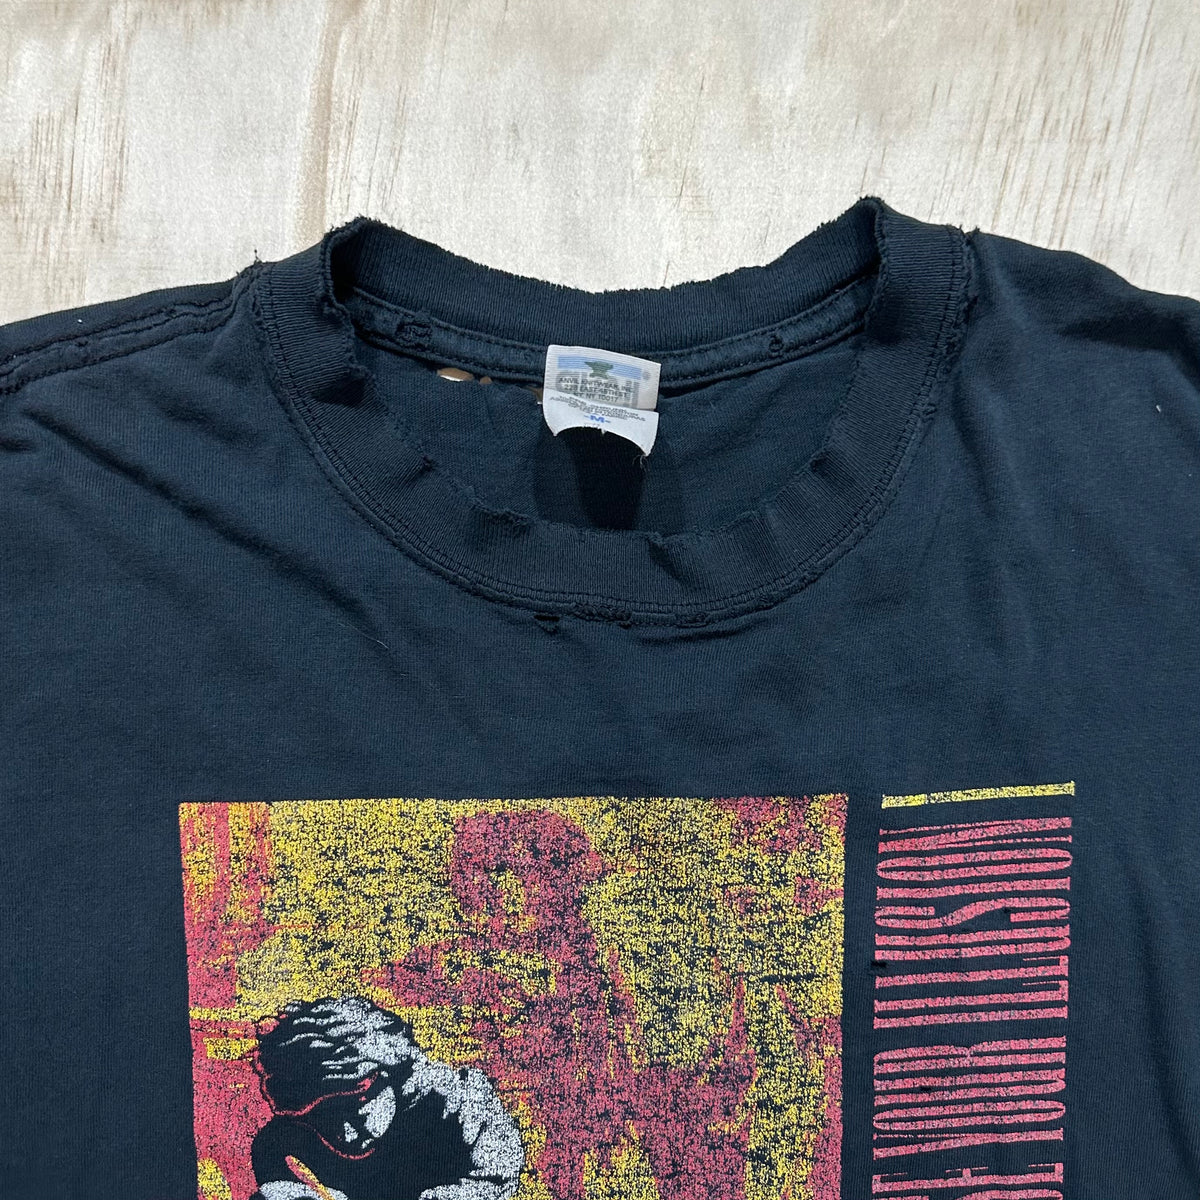 1991 Vintage Guns N Roses Use Your Illusion T-Shirt